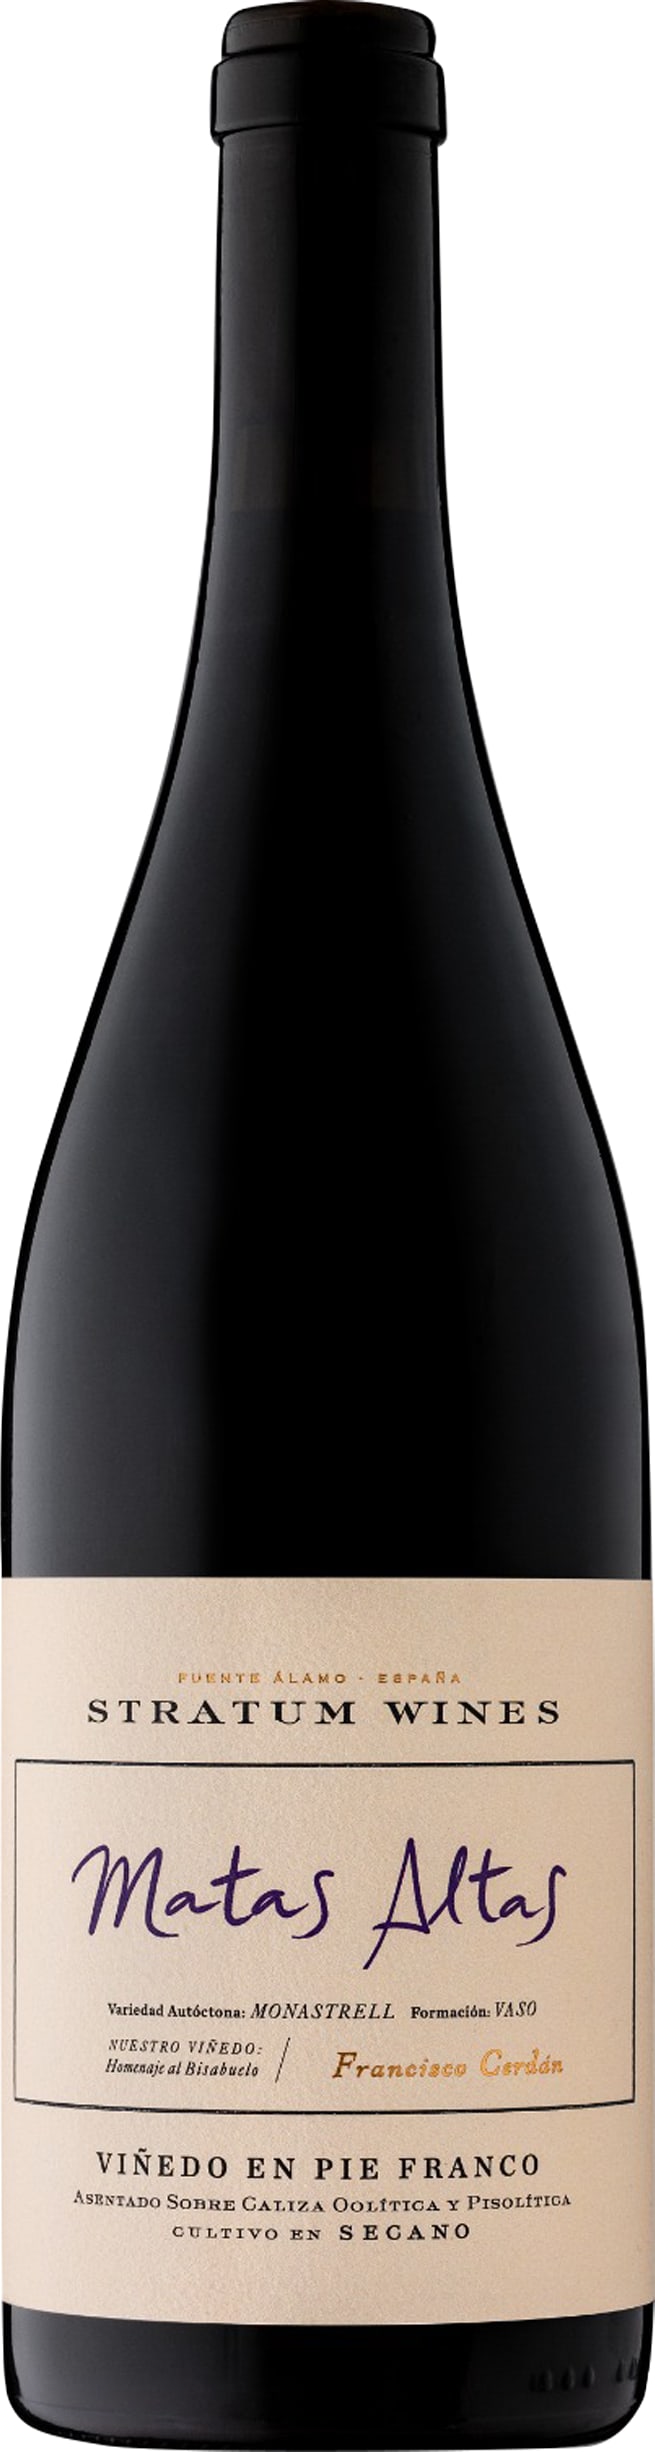 Bodega Cerron Matas Altas Monastrell 2021 75cl - Buy Bodega Cerron Wines from GREAT WINES DIRECT wine shop